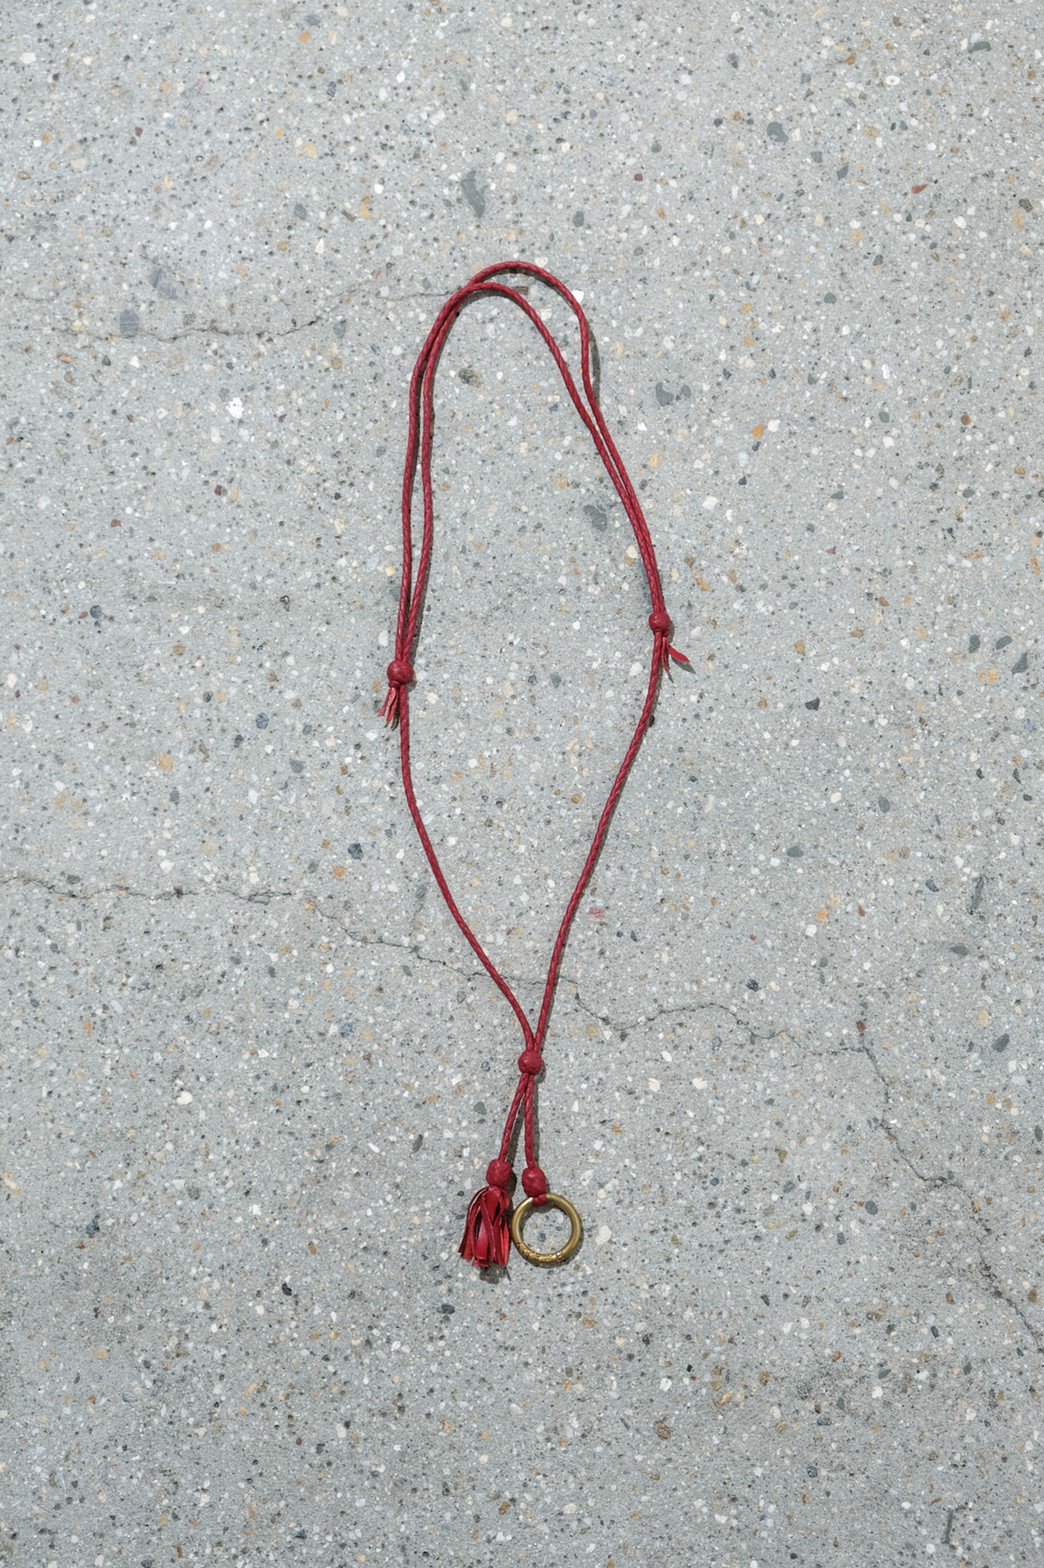 Matthew Ready Objects / Glassholder necklace